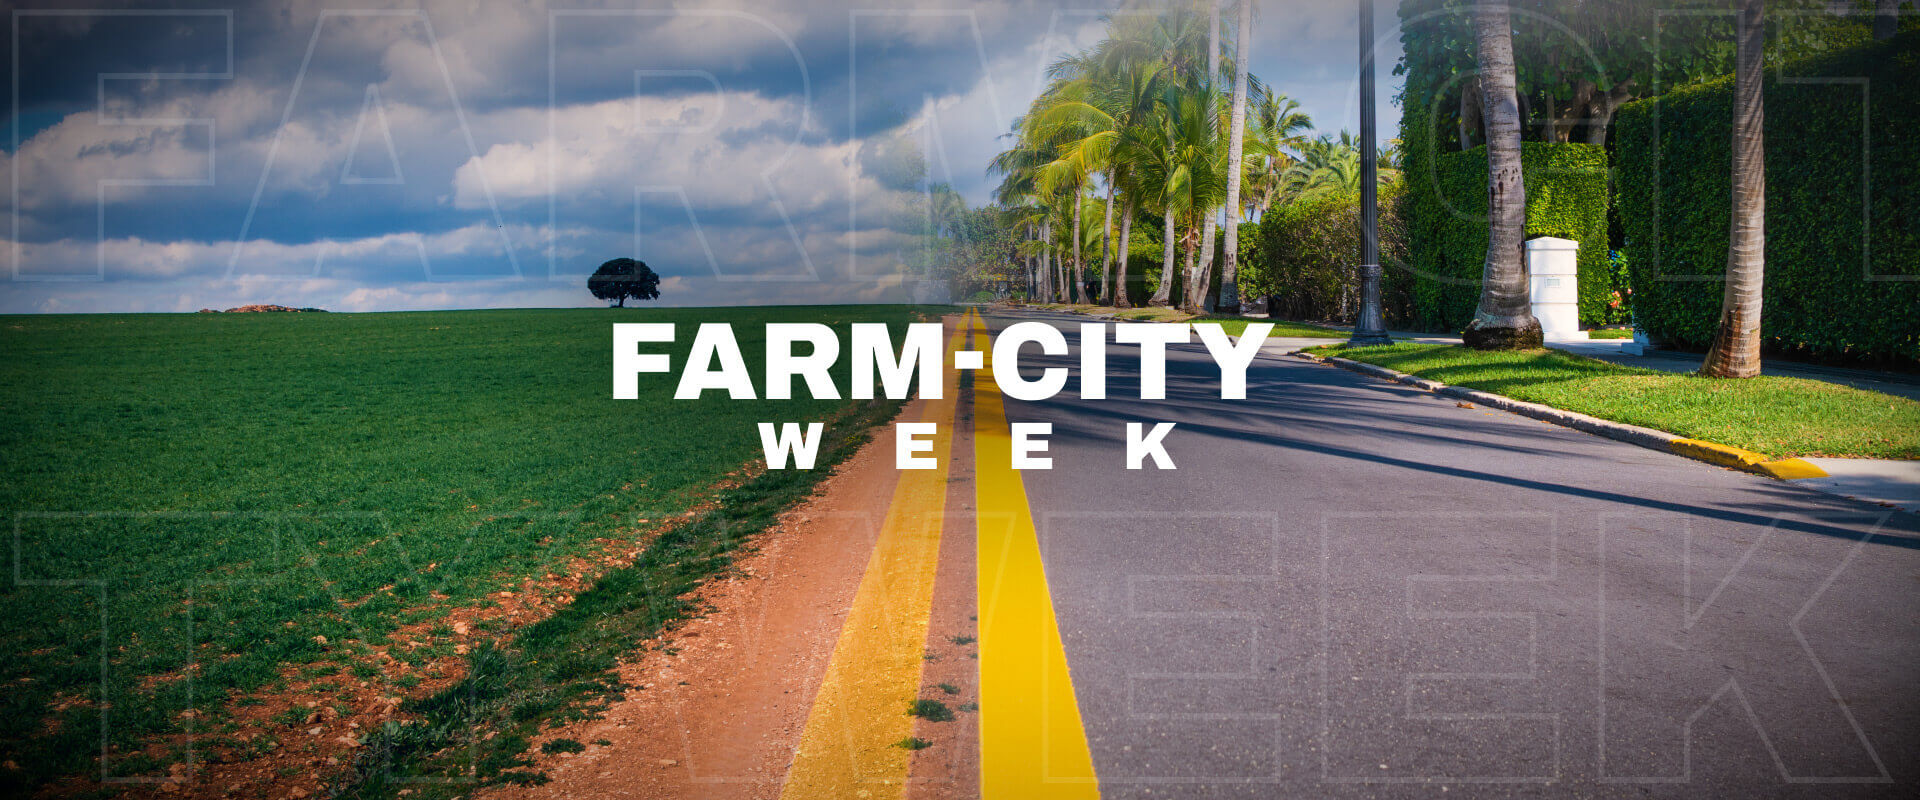 Farm-City Week